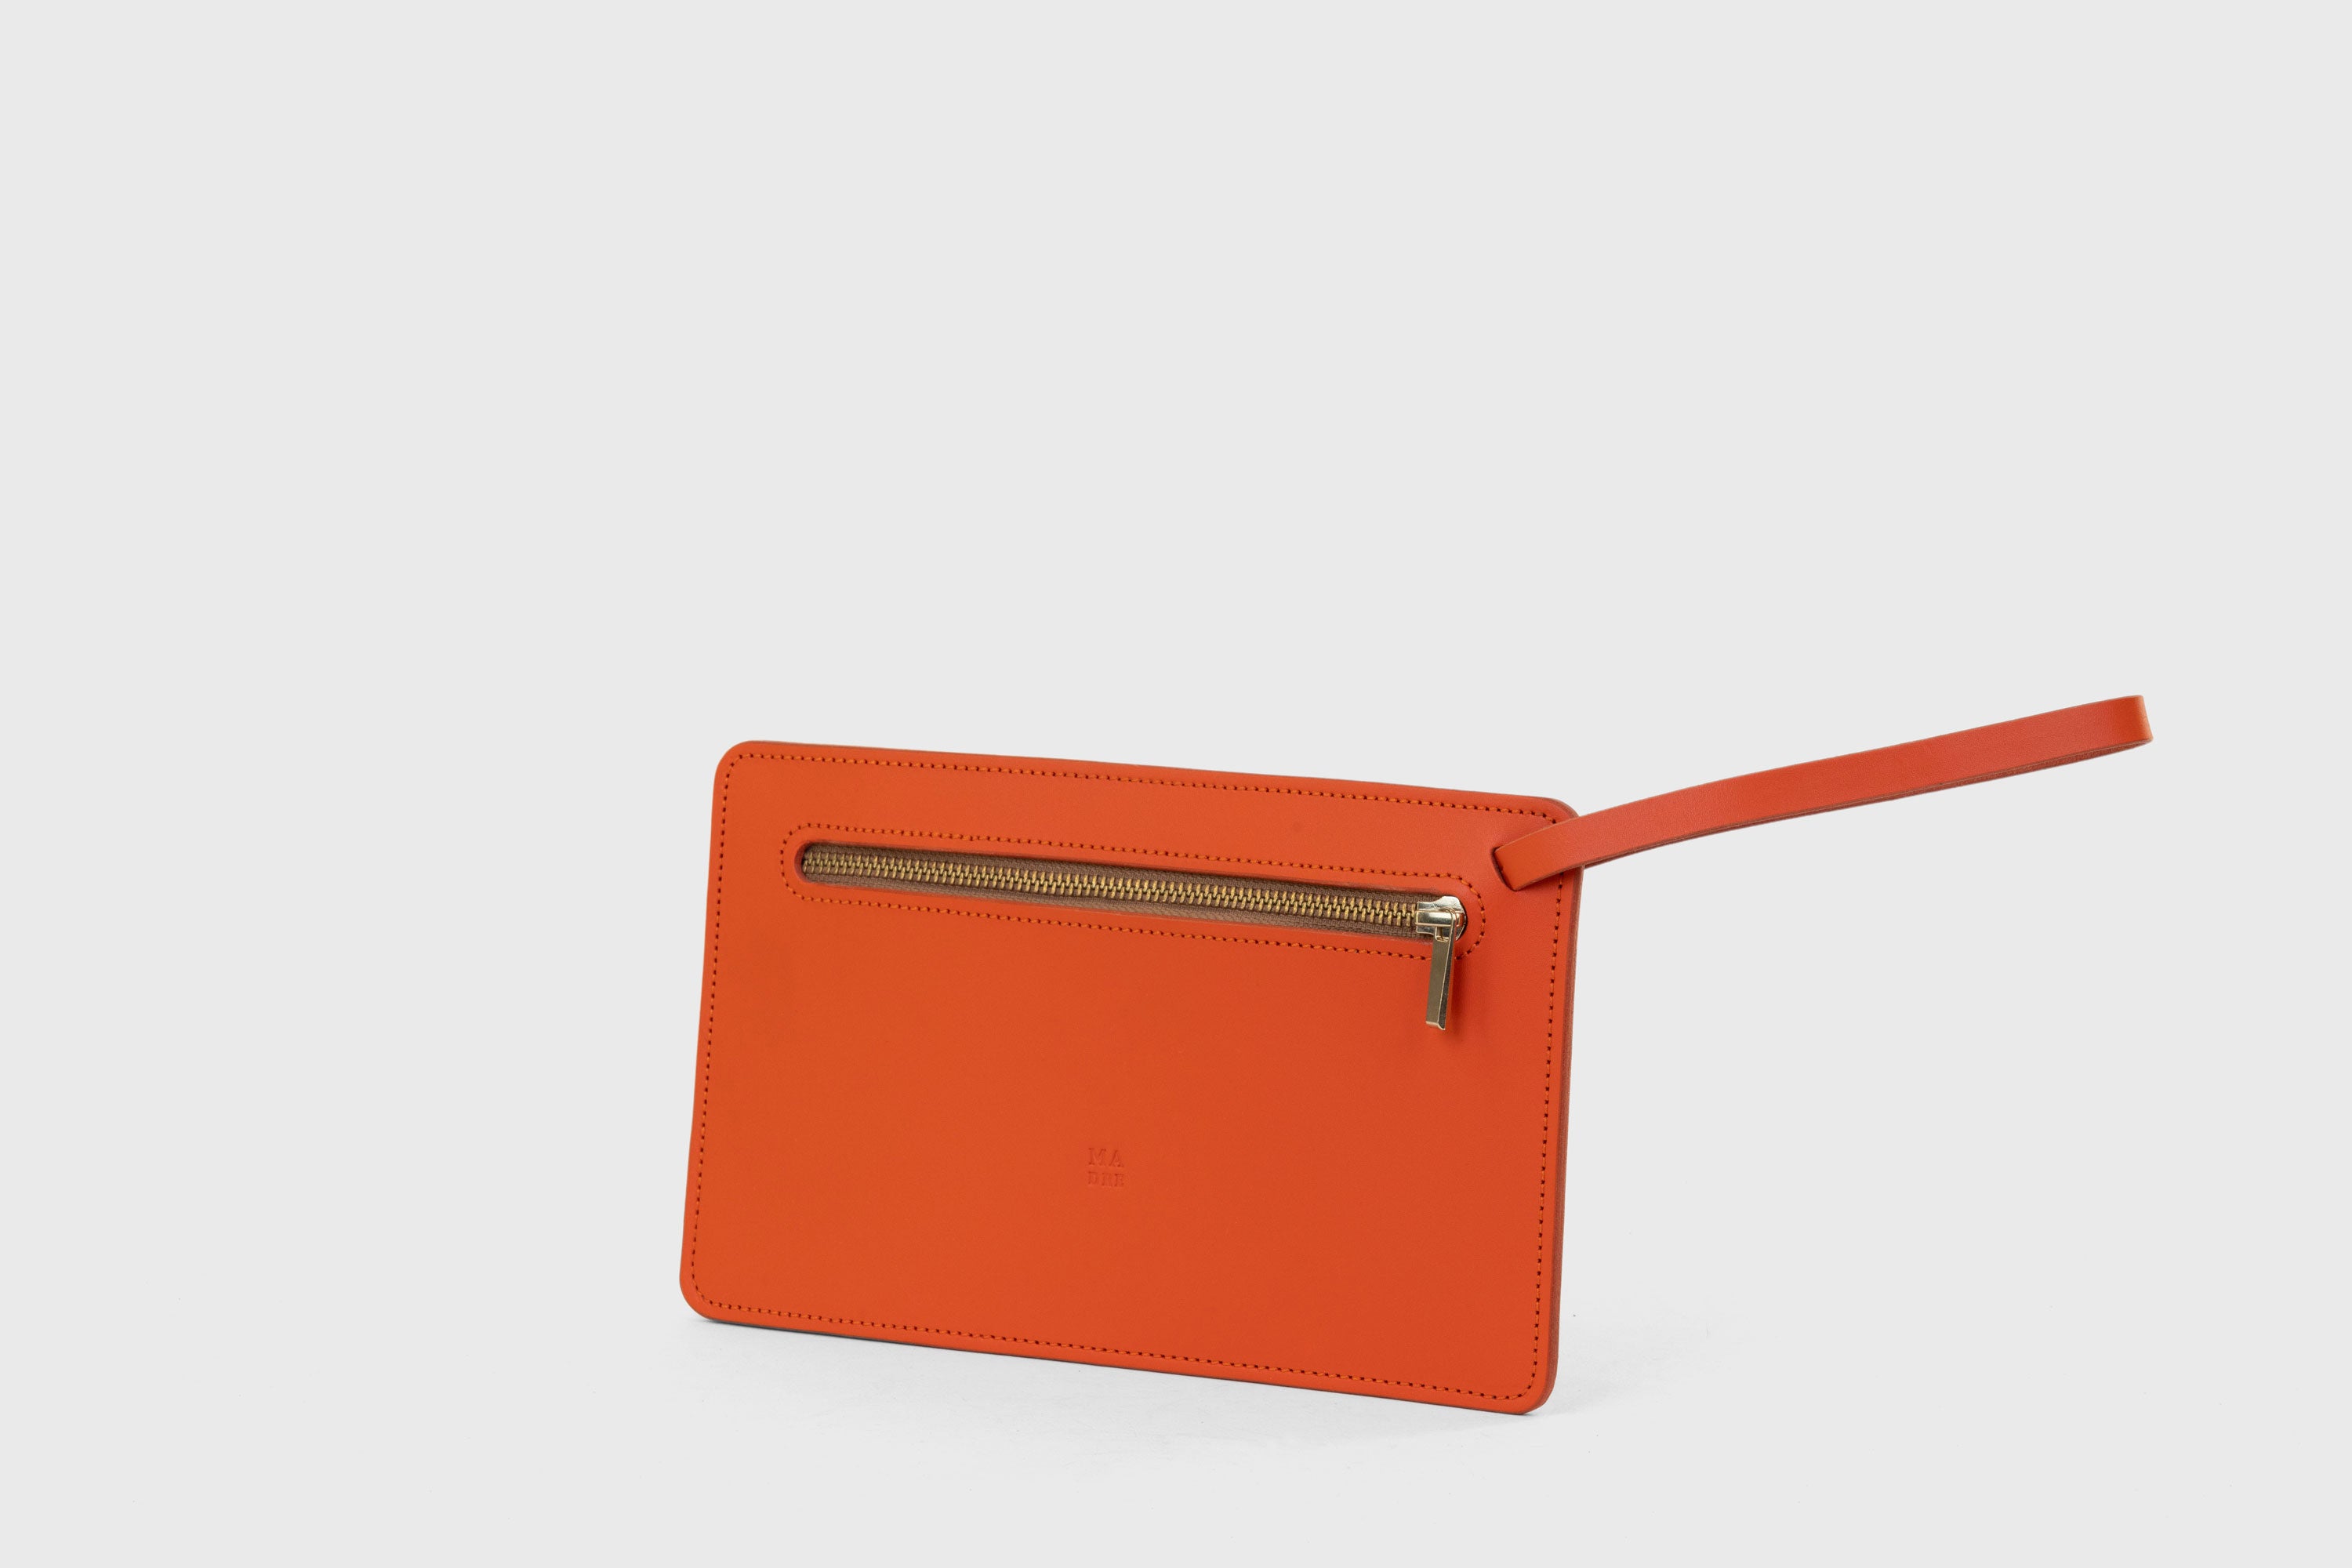 Clutch Flat Leather Orange Bag Slim Wrist Band Zipper Minimalistic Premium Handmade Design Atelier Madre Manuel Dreesmann Barcelona Spain